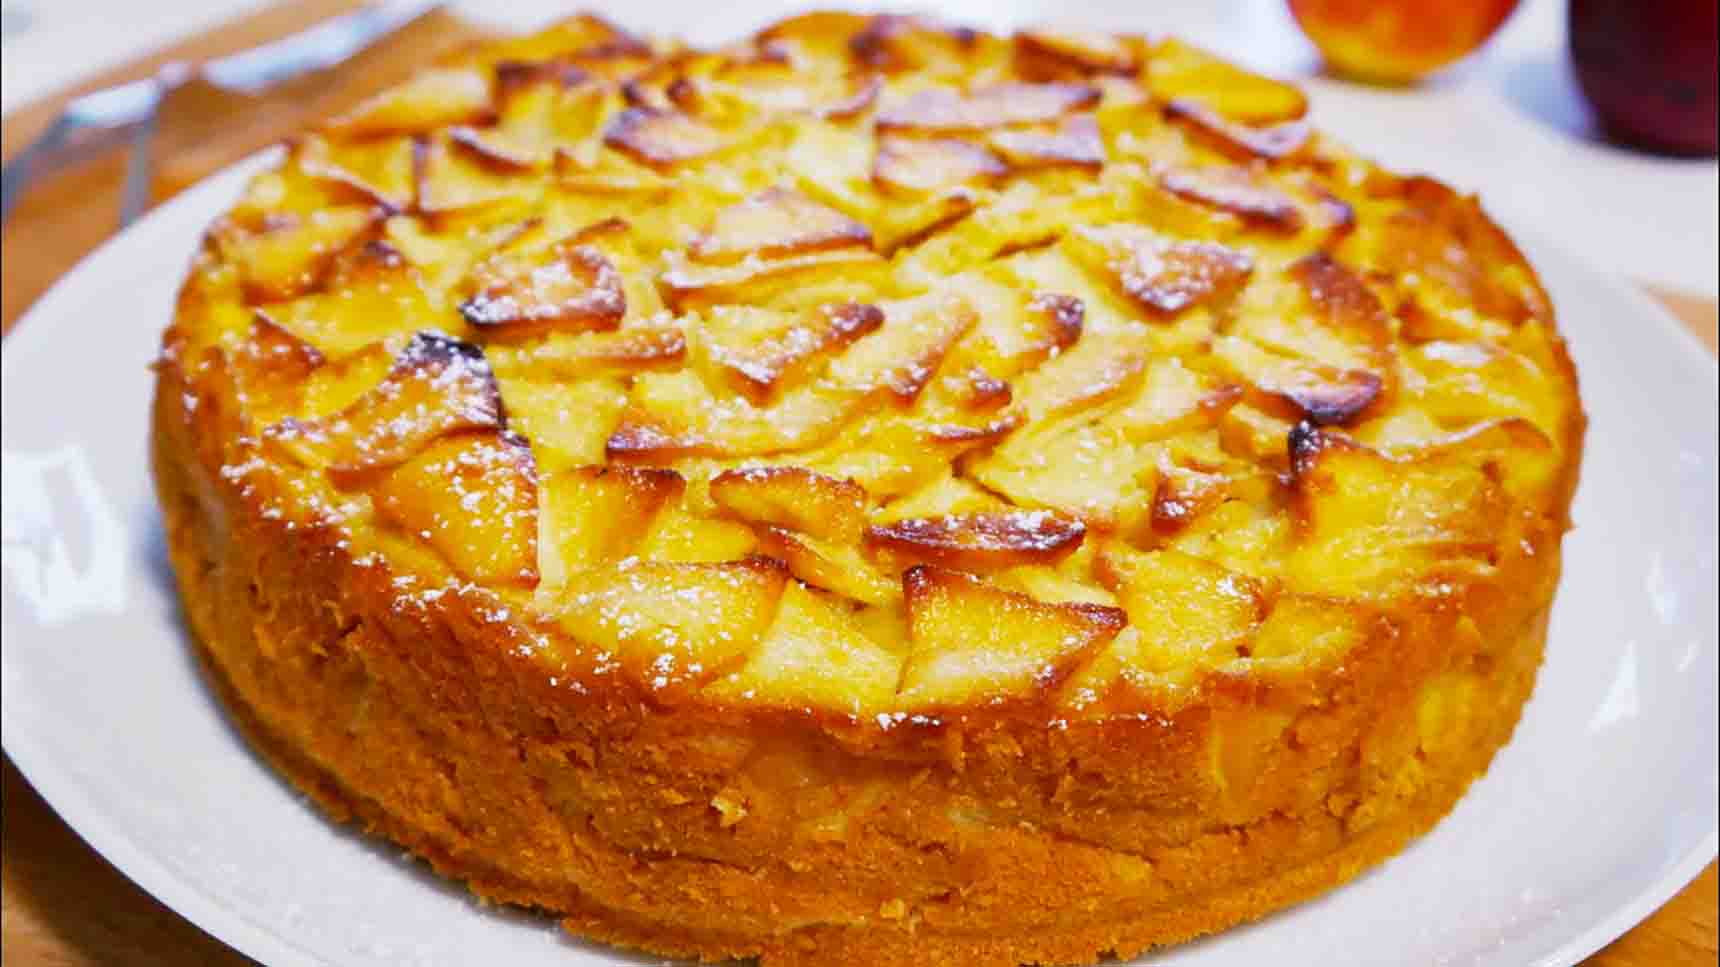 Double Apple Bundt Cake with Lemon Glaze - Joanne Eats Well With Others